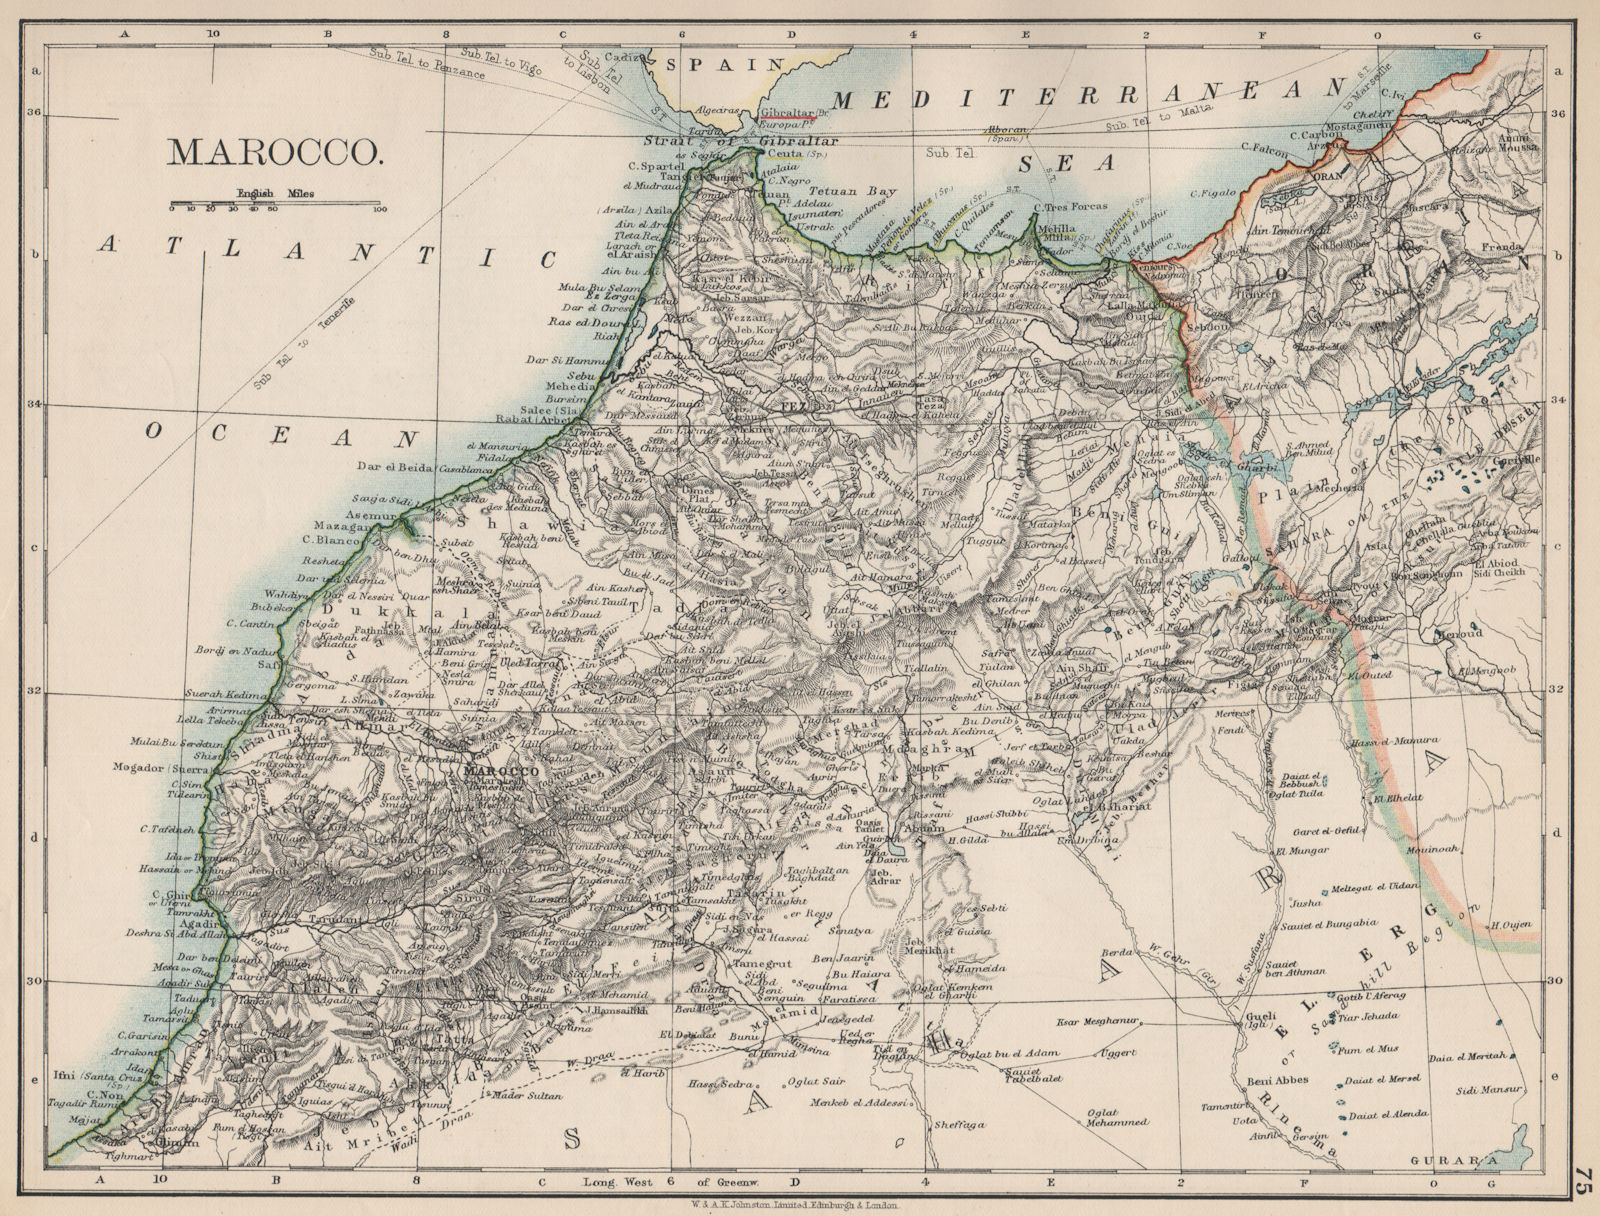 MOROCCO. Showing Atlas mountains rivers towns. Marrakech. JOHNSTON 1903 map